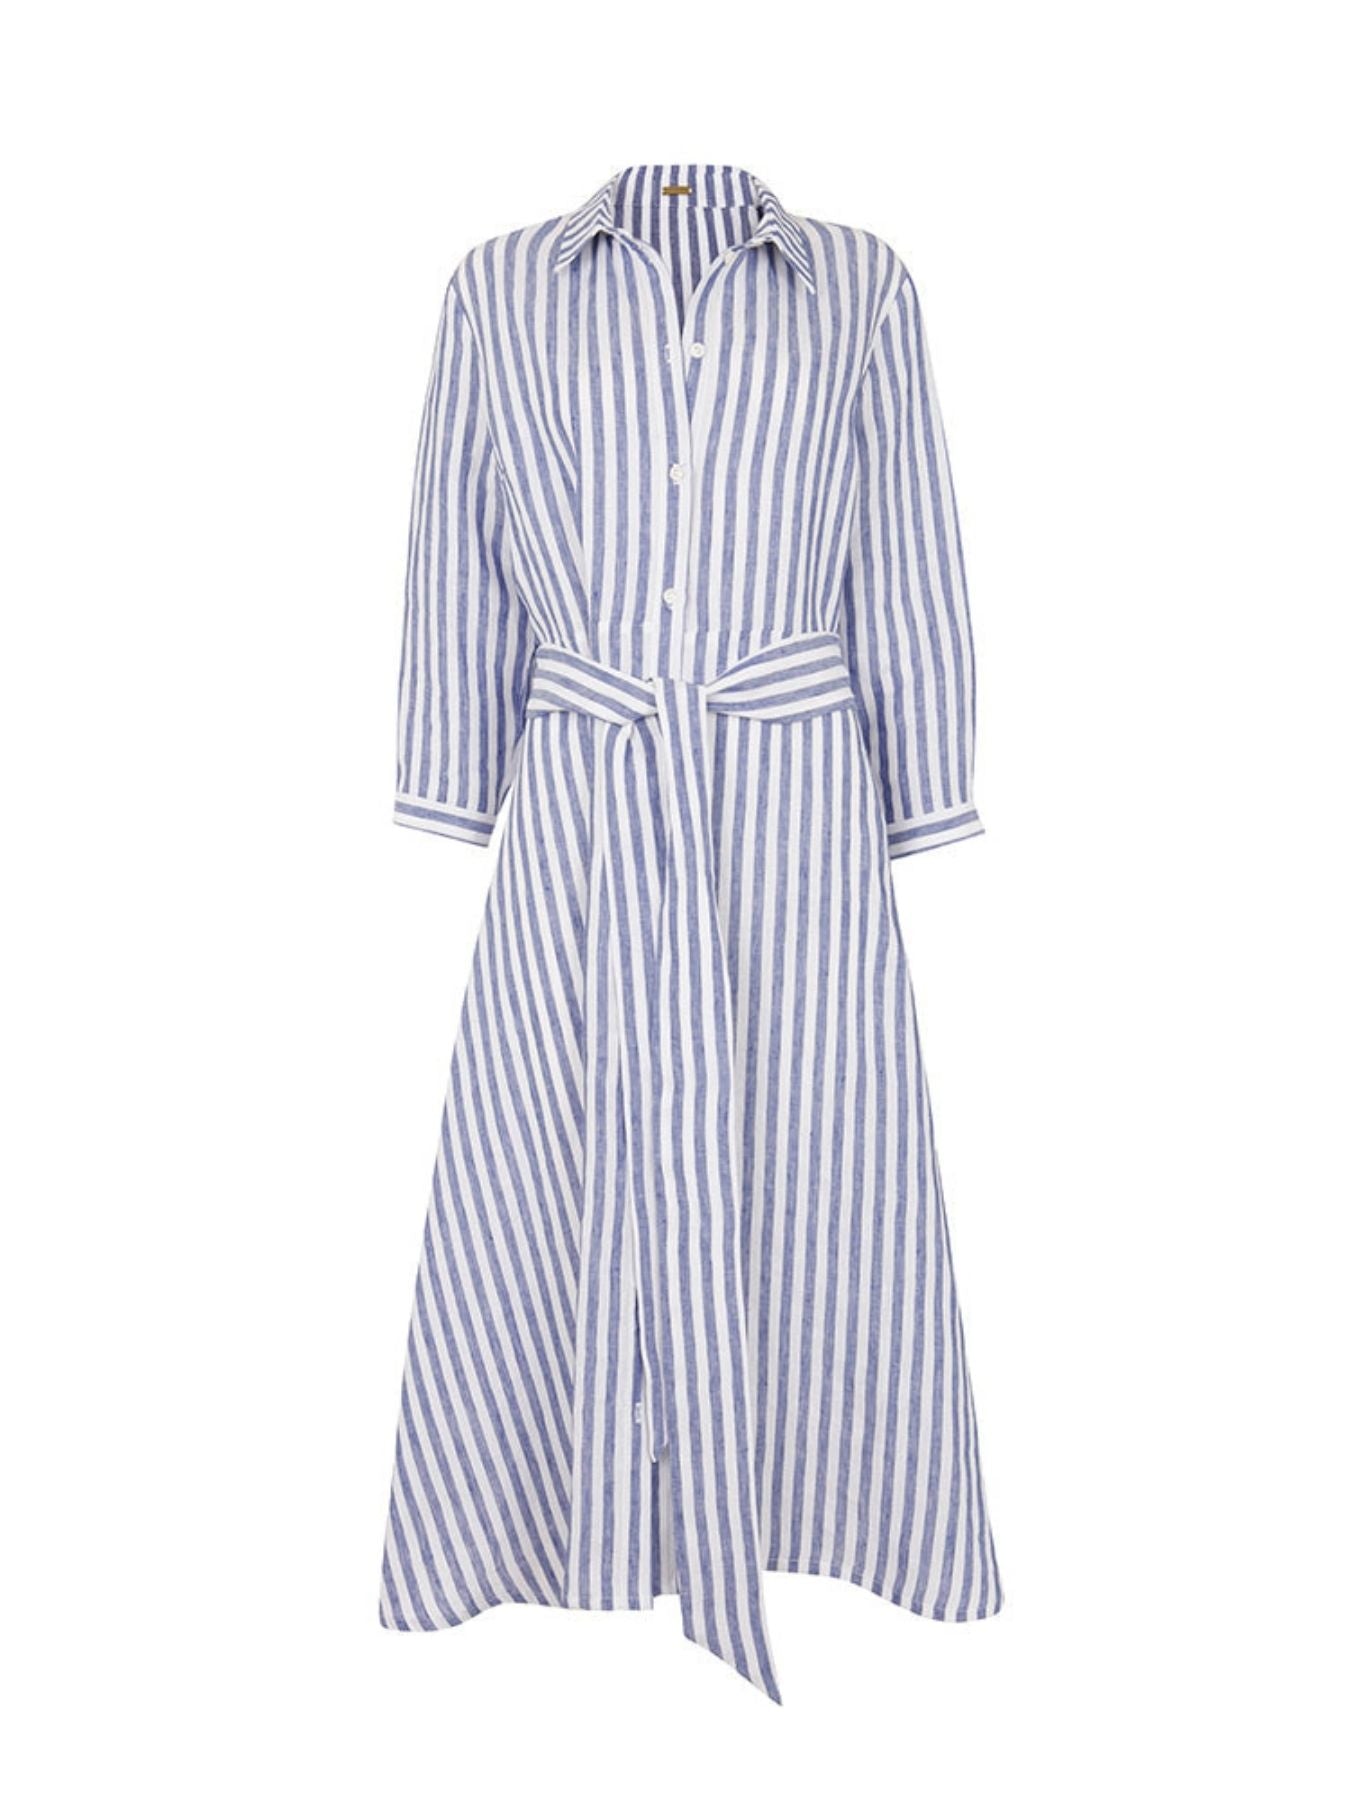 Relevé | Oramai London St. Tropez Shirt Dress, Blue / White